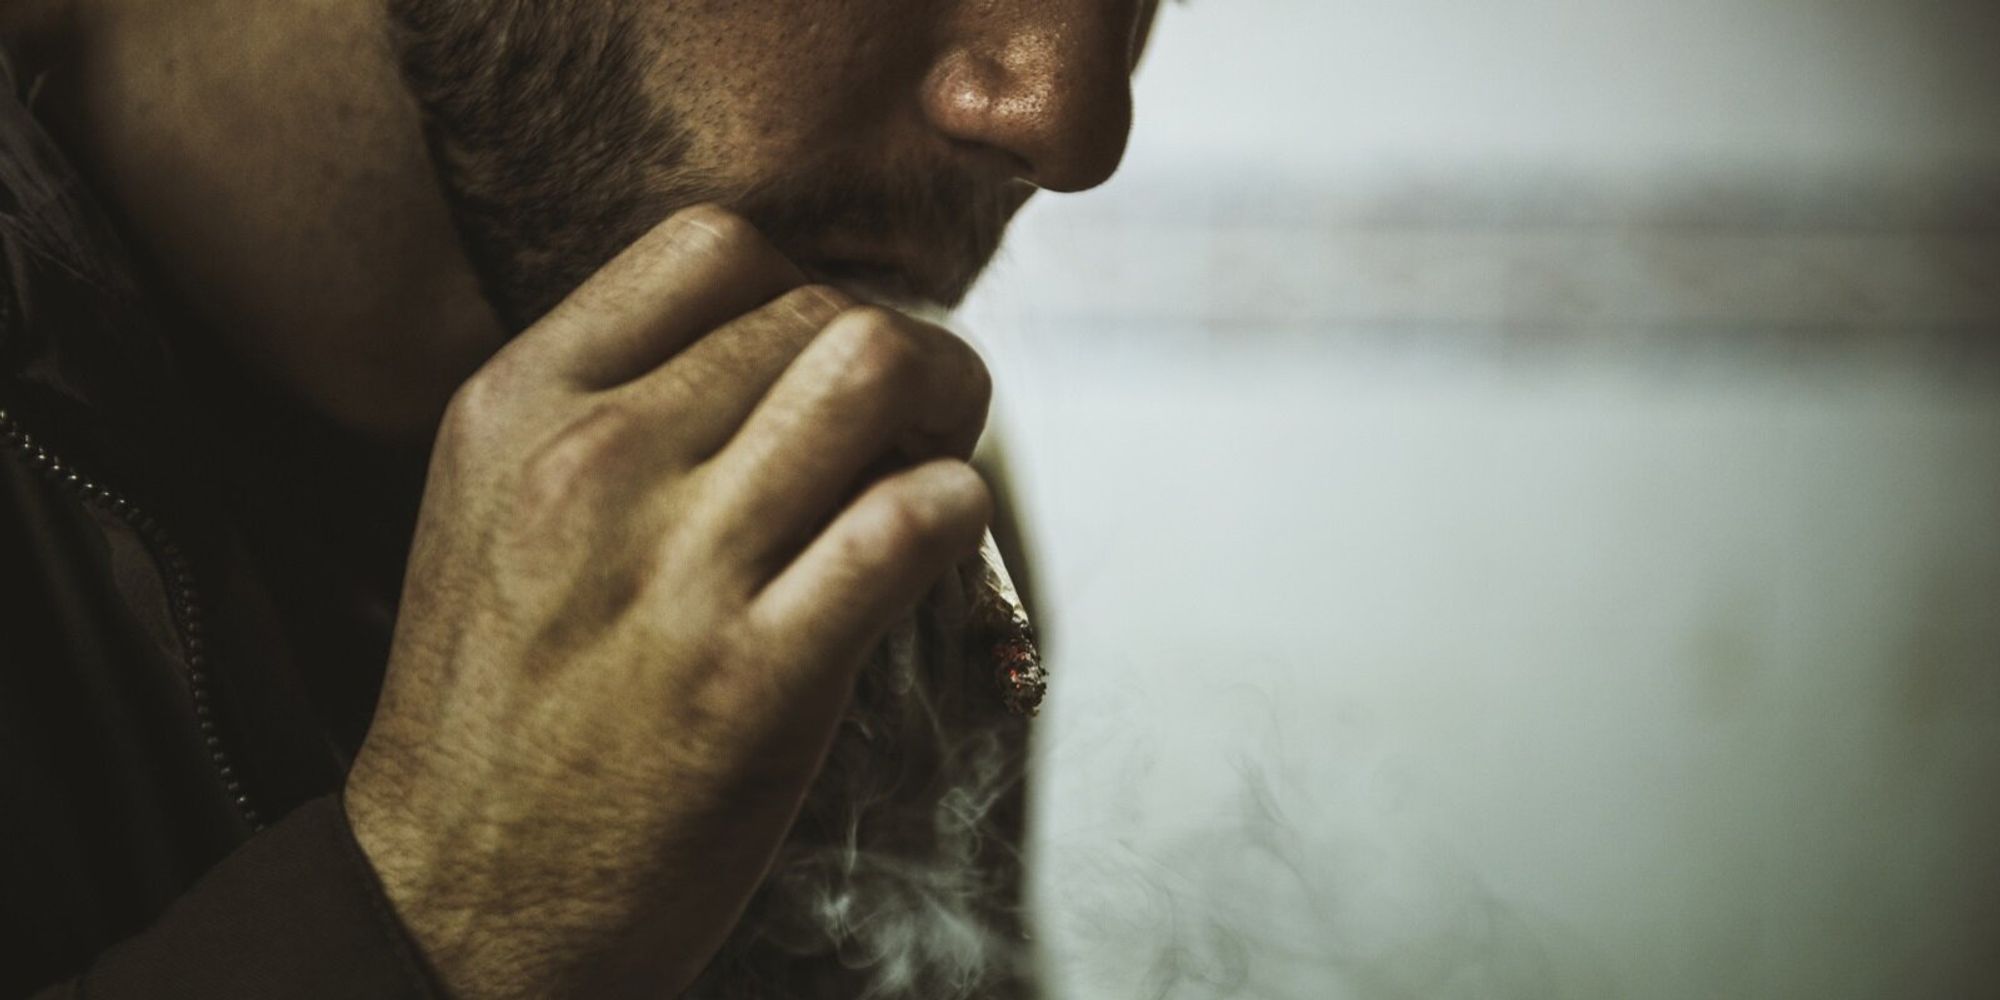 Is smoking pot self-sabotage? Or just having a little fun?